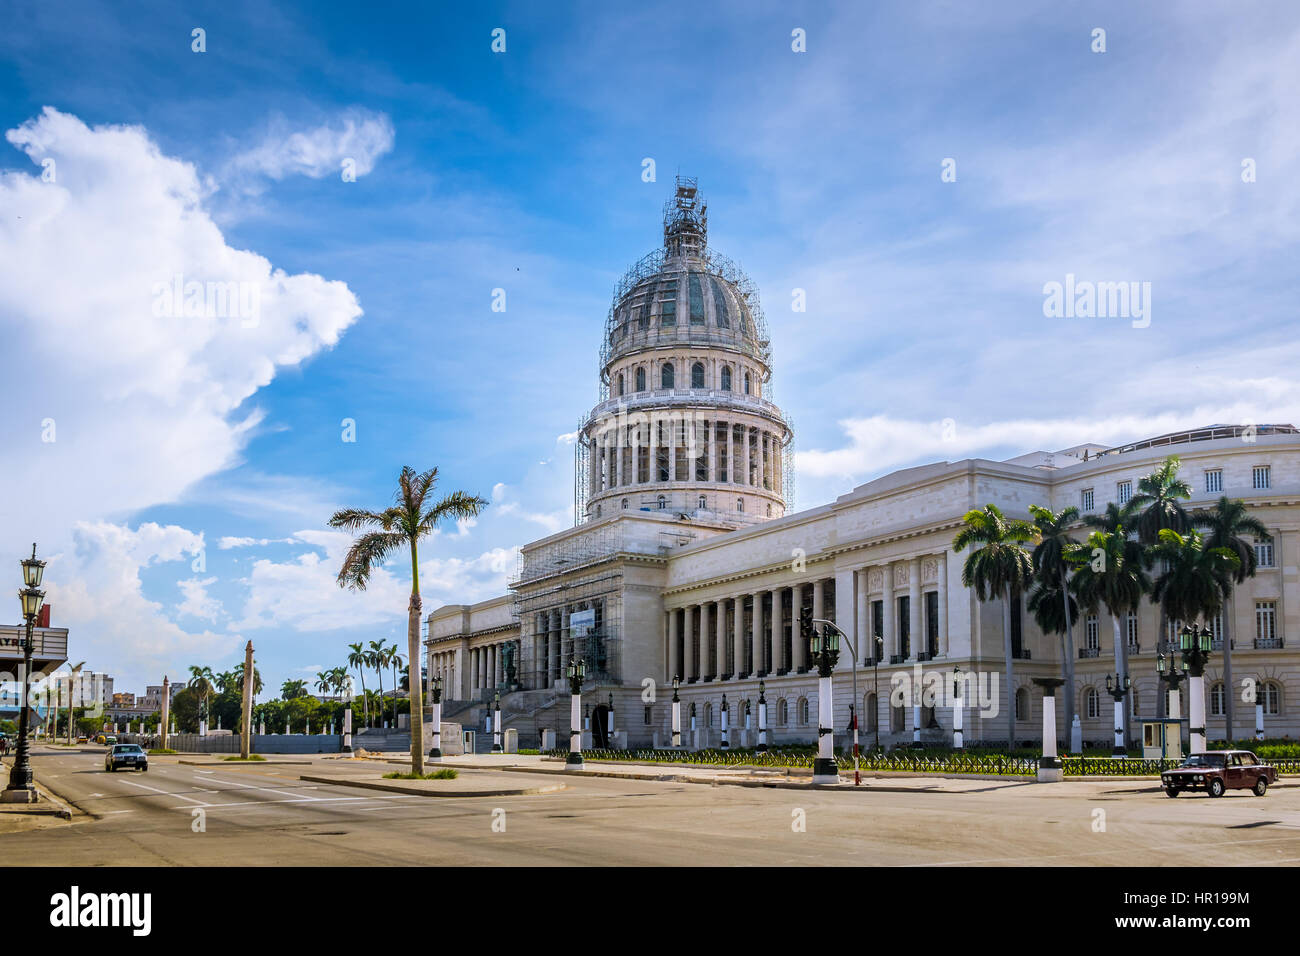 The Capitol (El Capitolio) building - Havana, Cuba Stock Photo